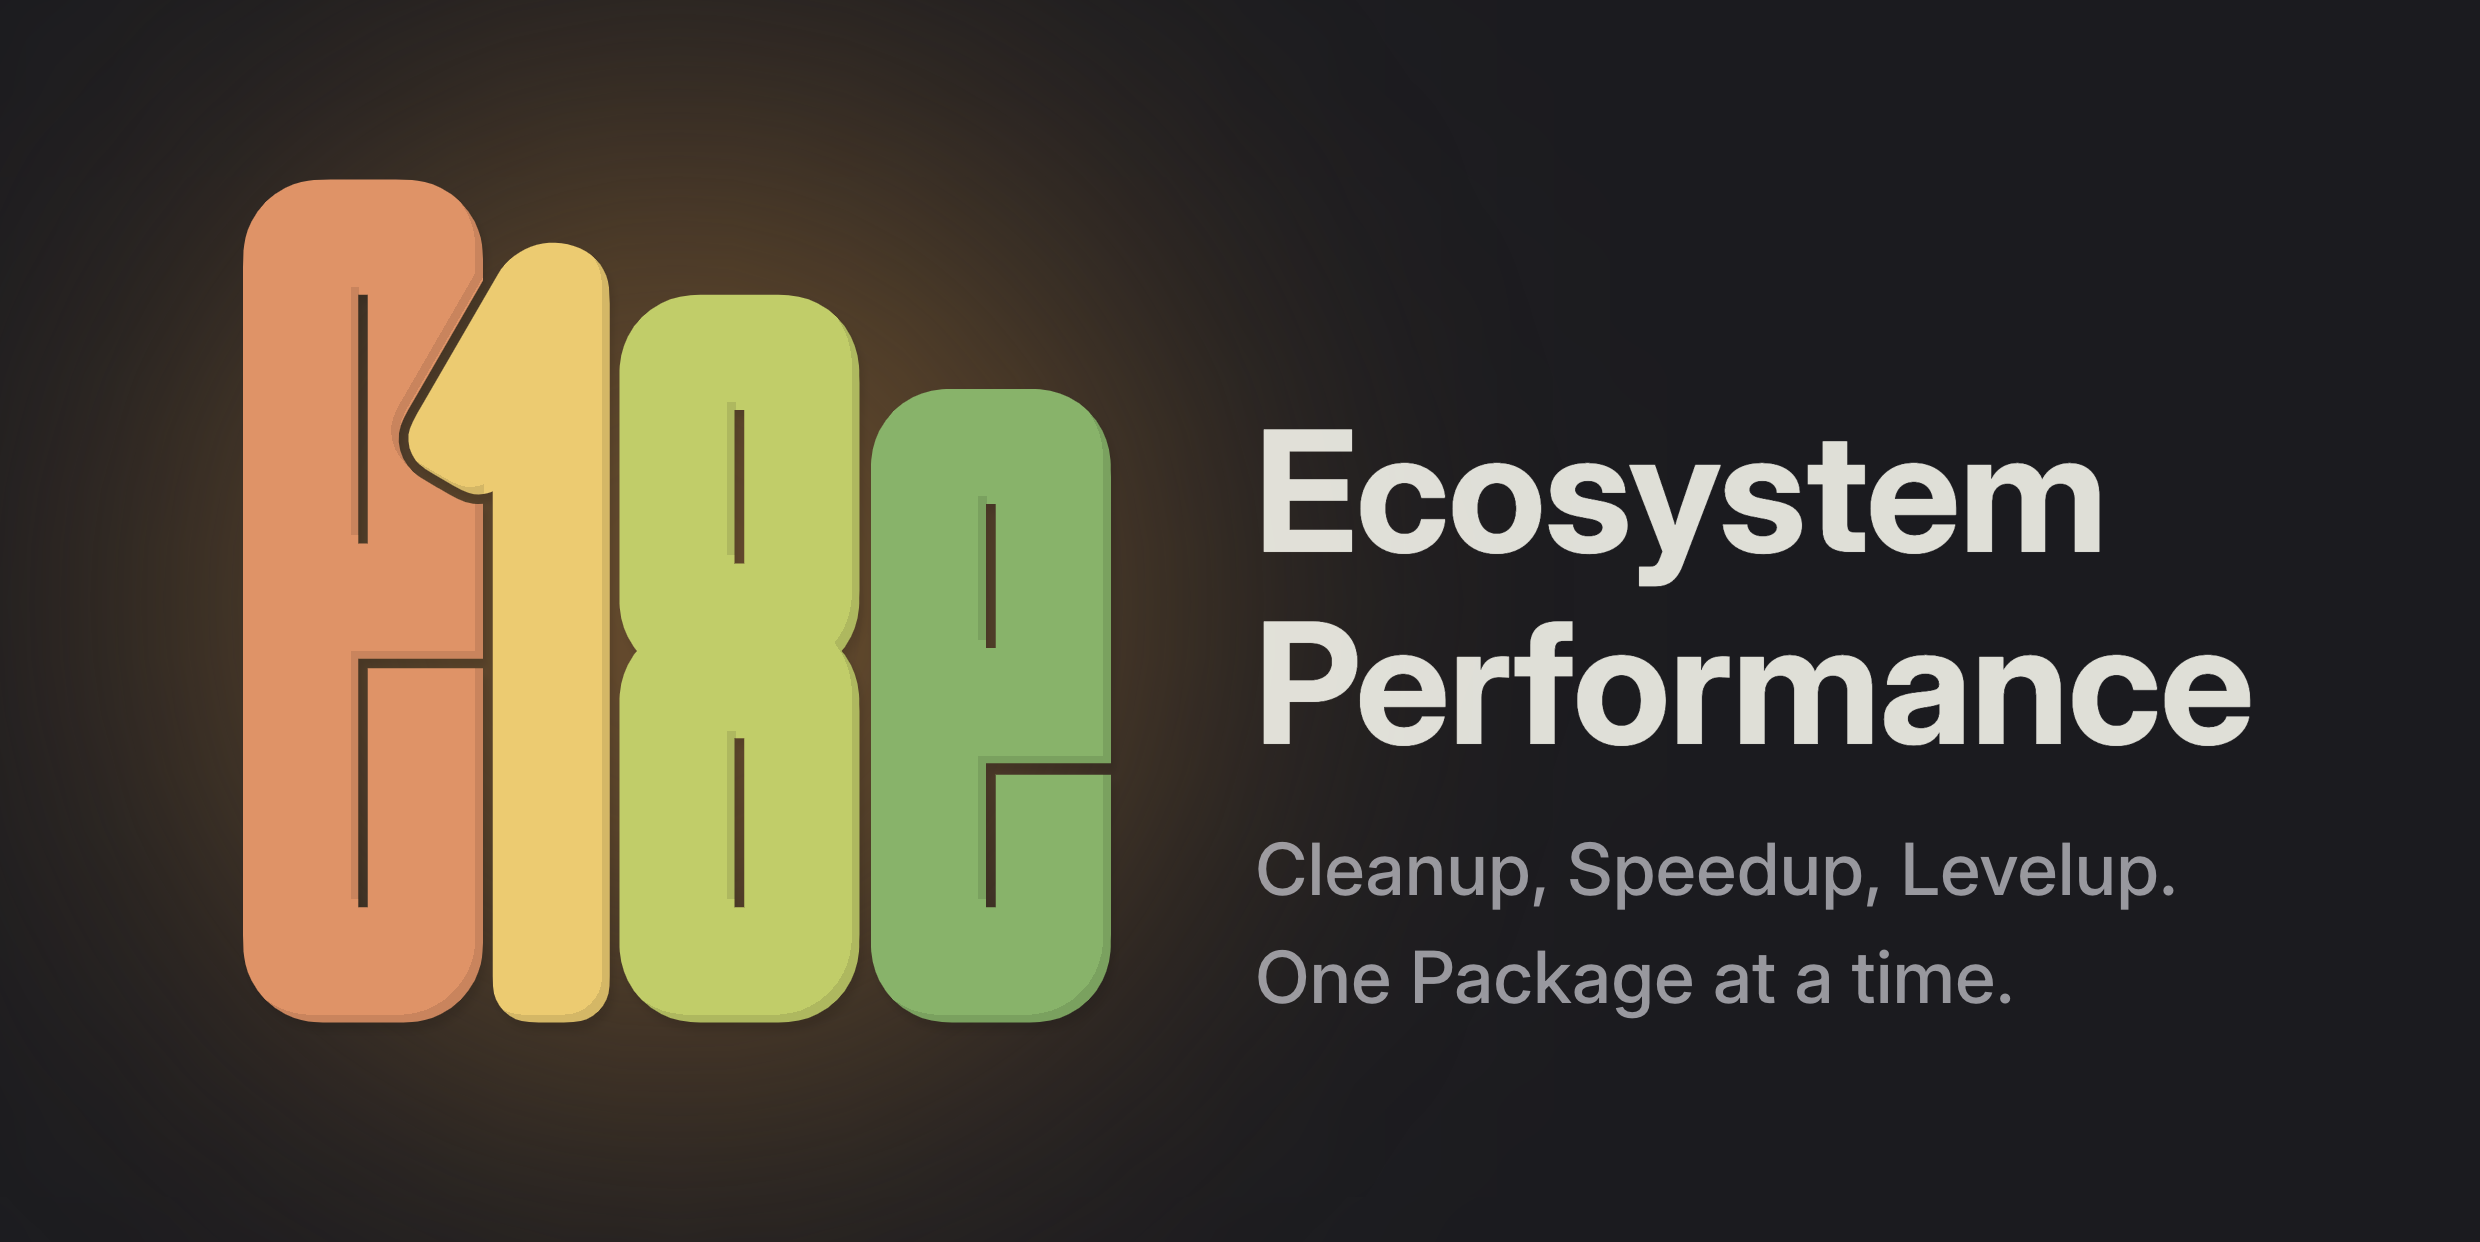 e18e (Ecosystem Performance)